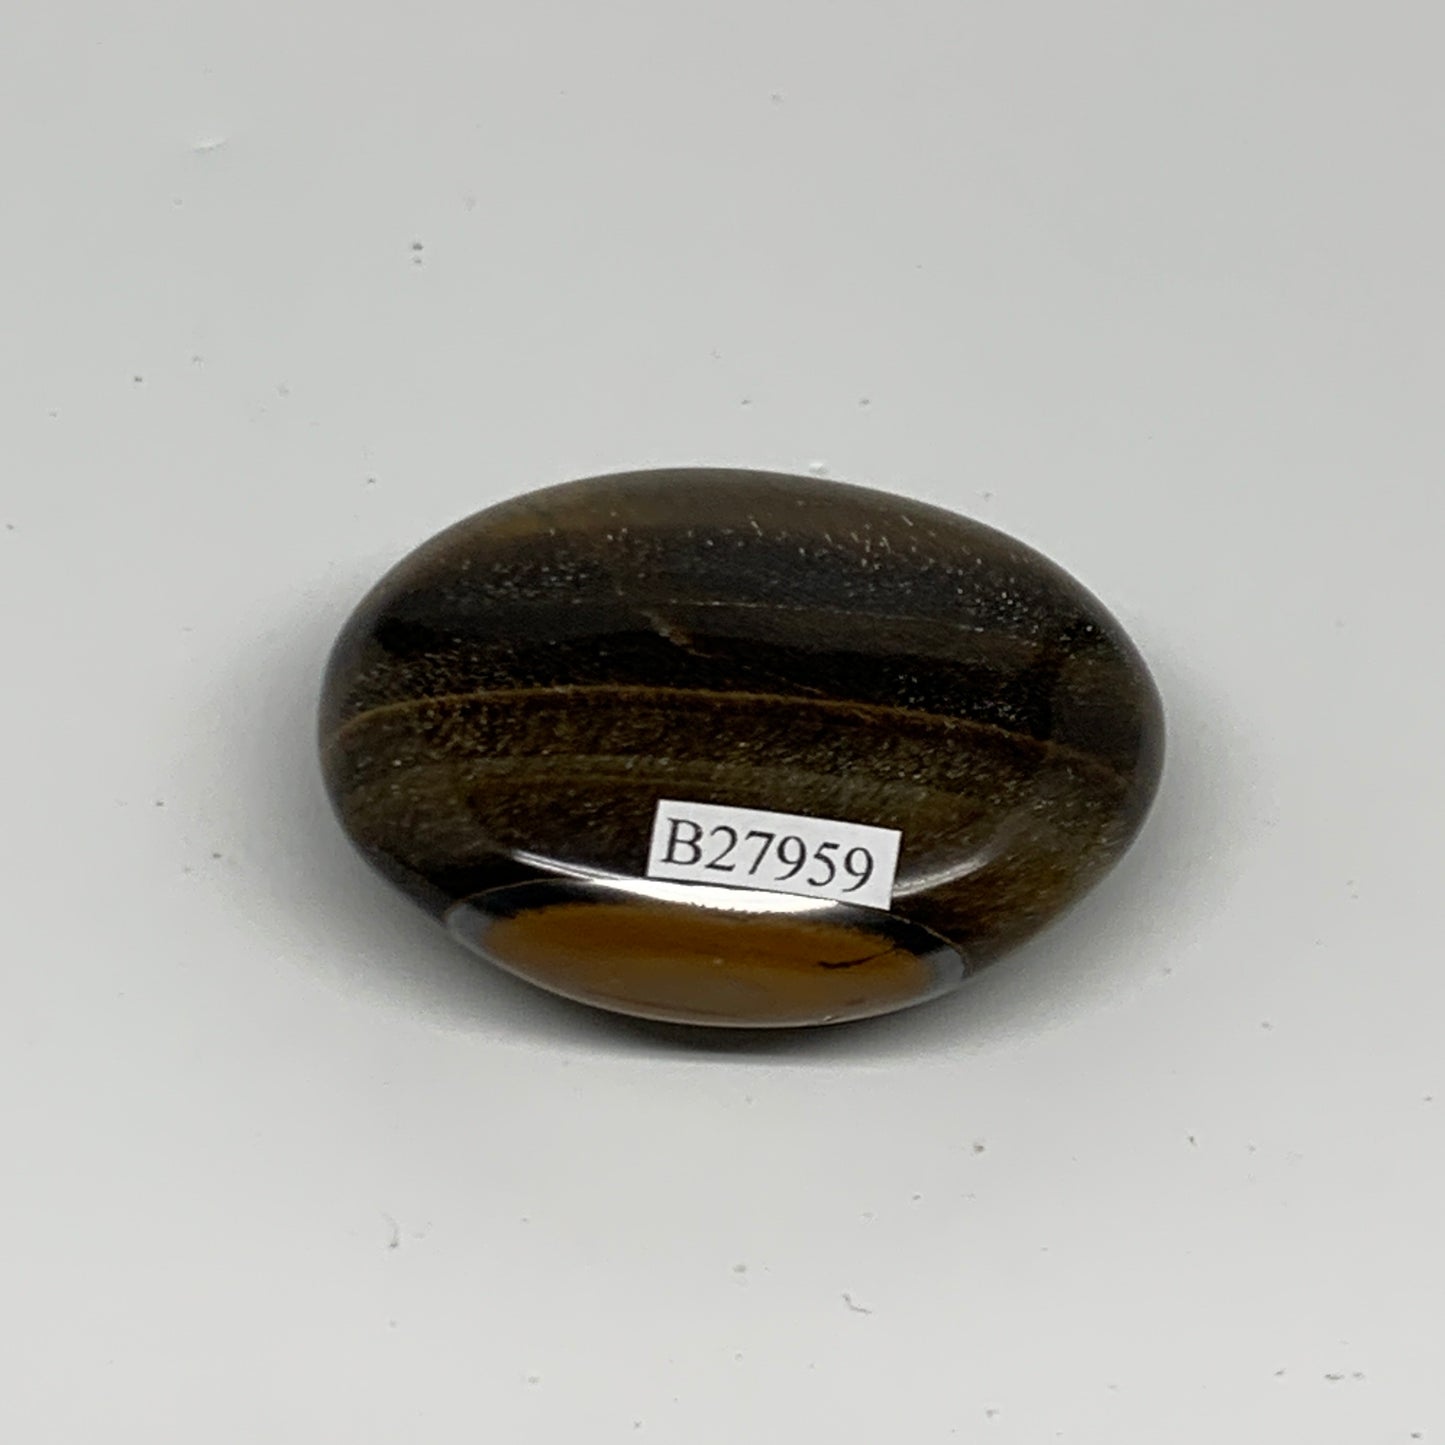 77.3g, 2.2"x1.7"x0.8", Natural Tiger's Eye Palm-Stone Gemstone @India, B27959